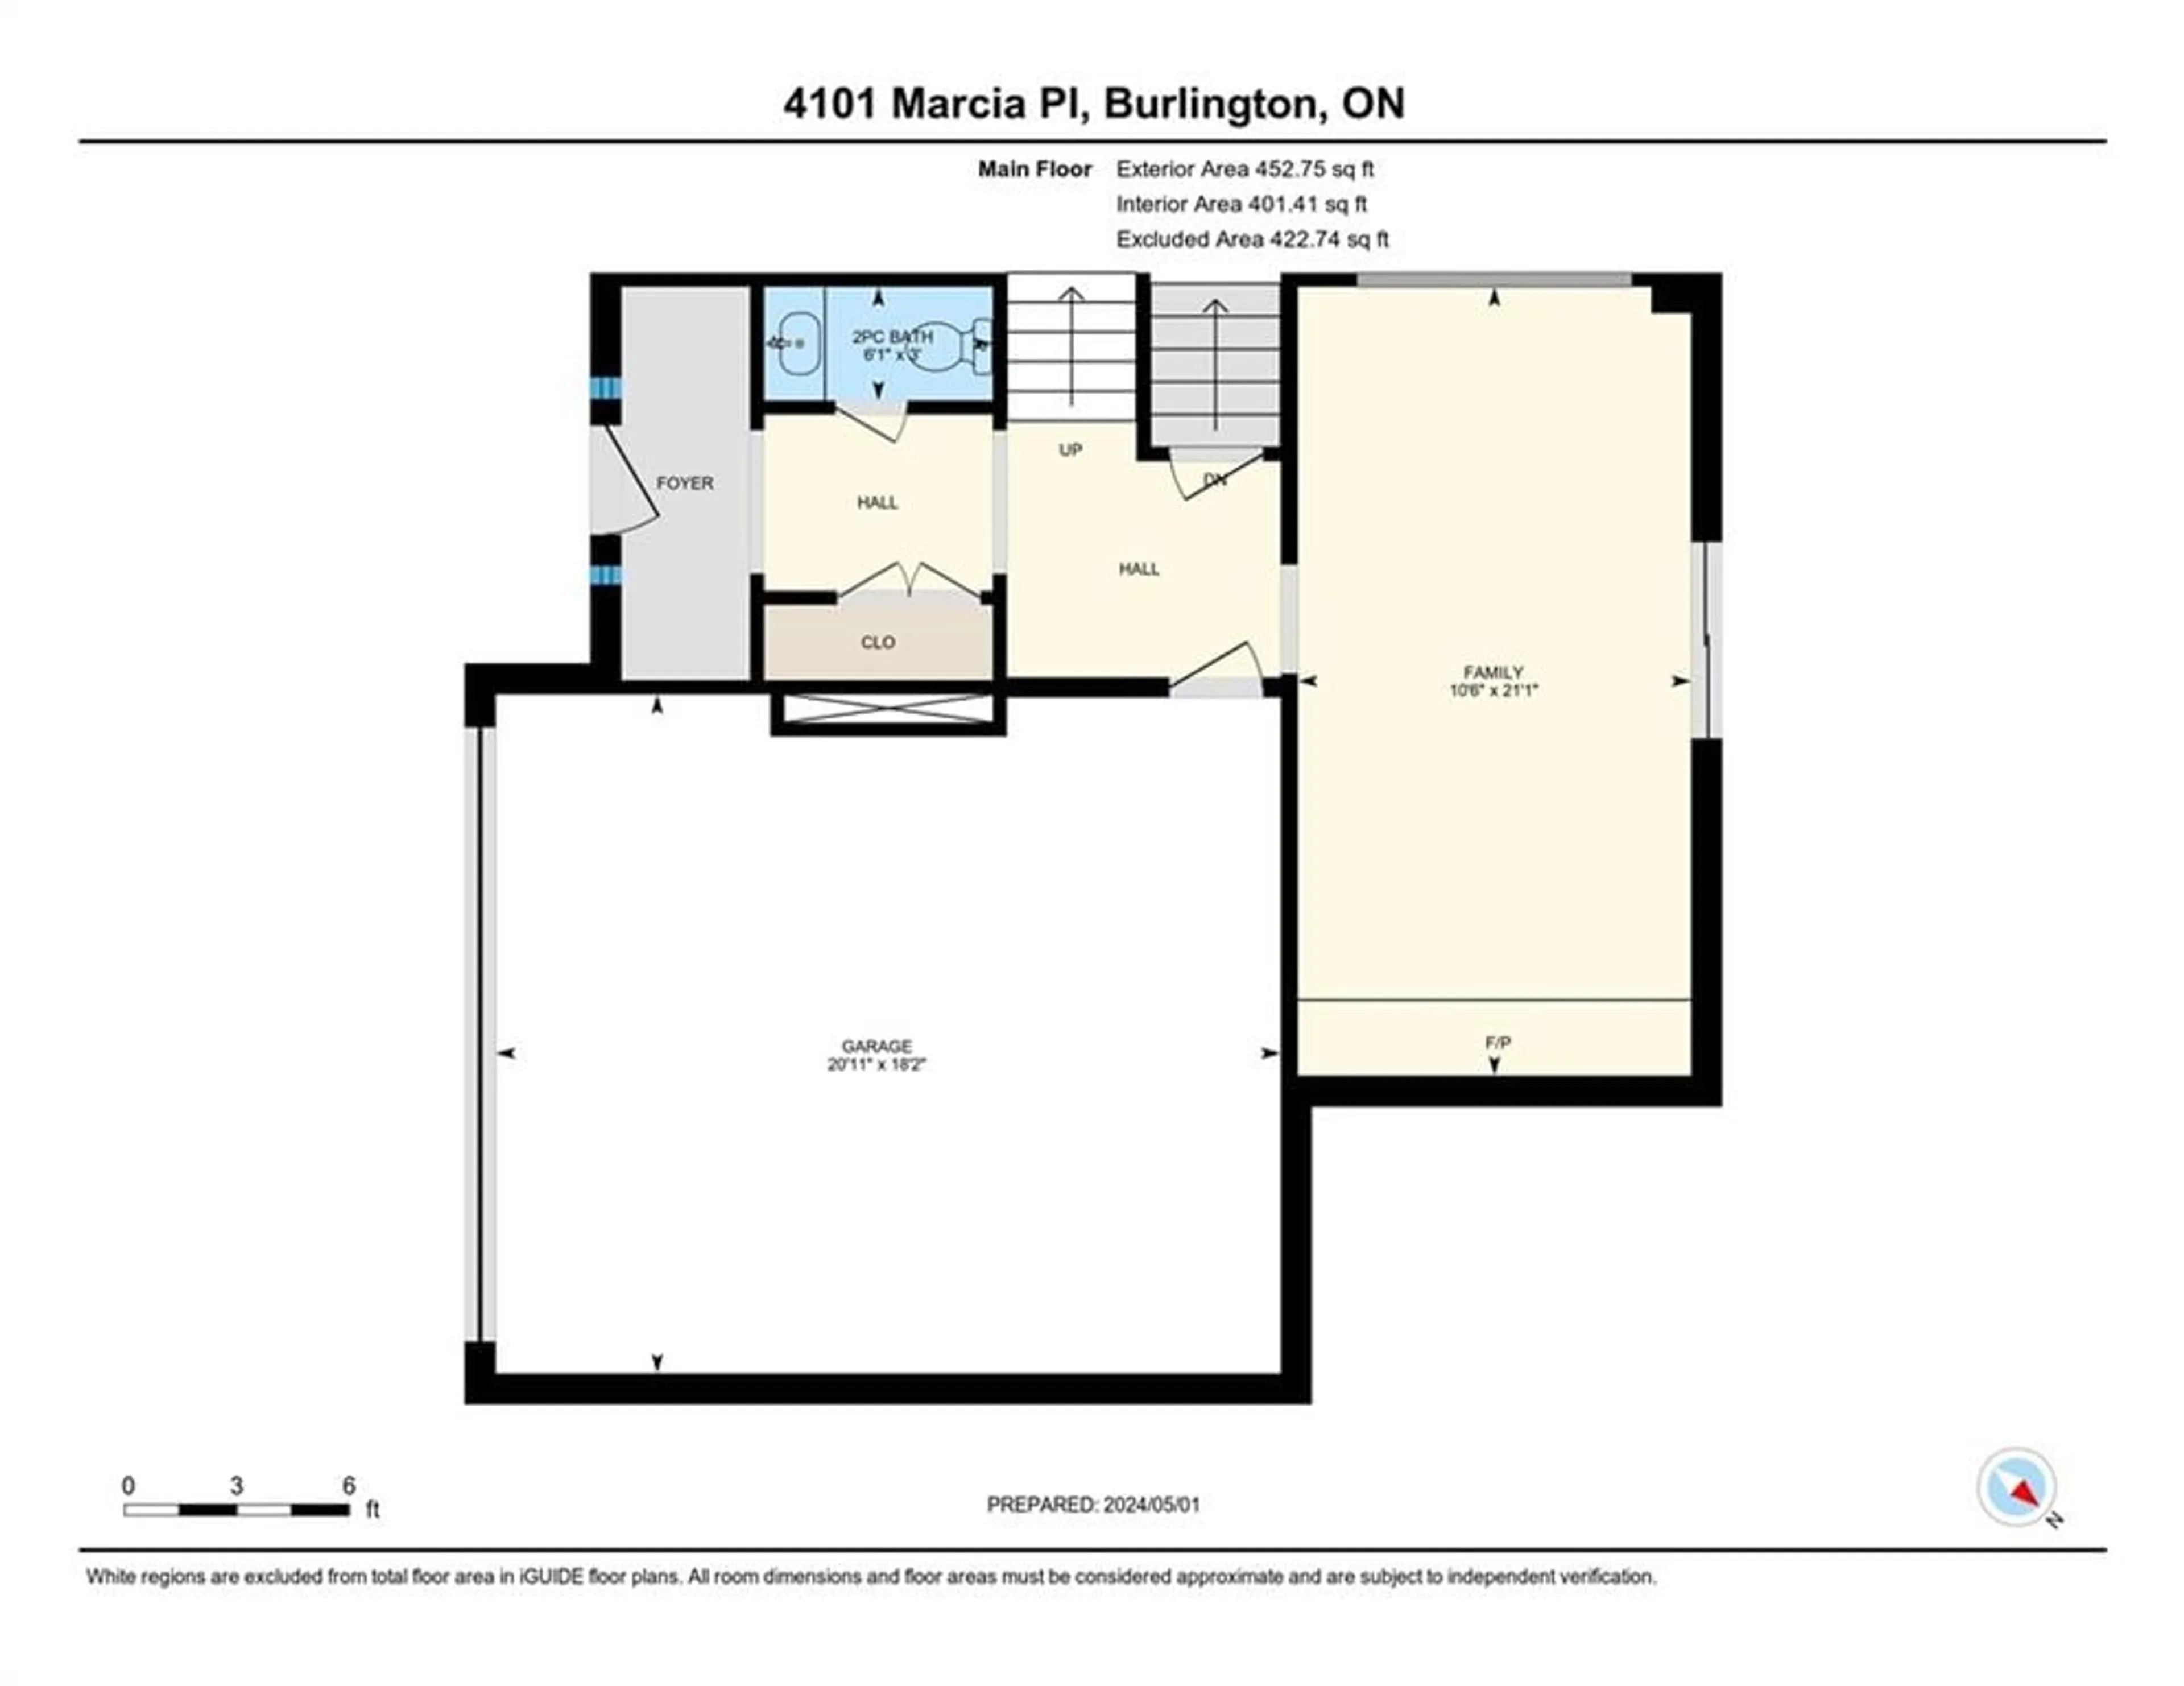 Floor plan for 4101 Marcia Pl, Burlington Ontario L7L 5B6